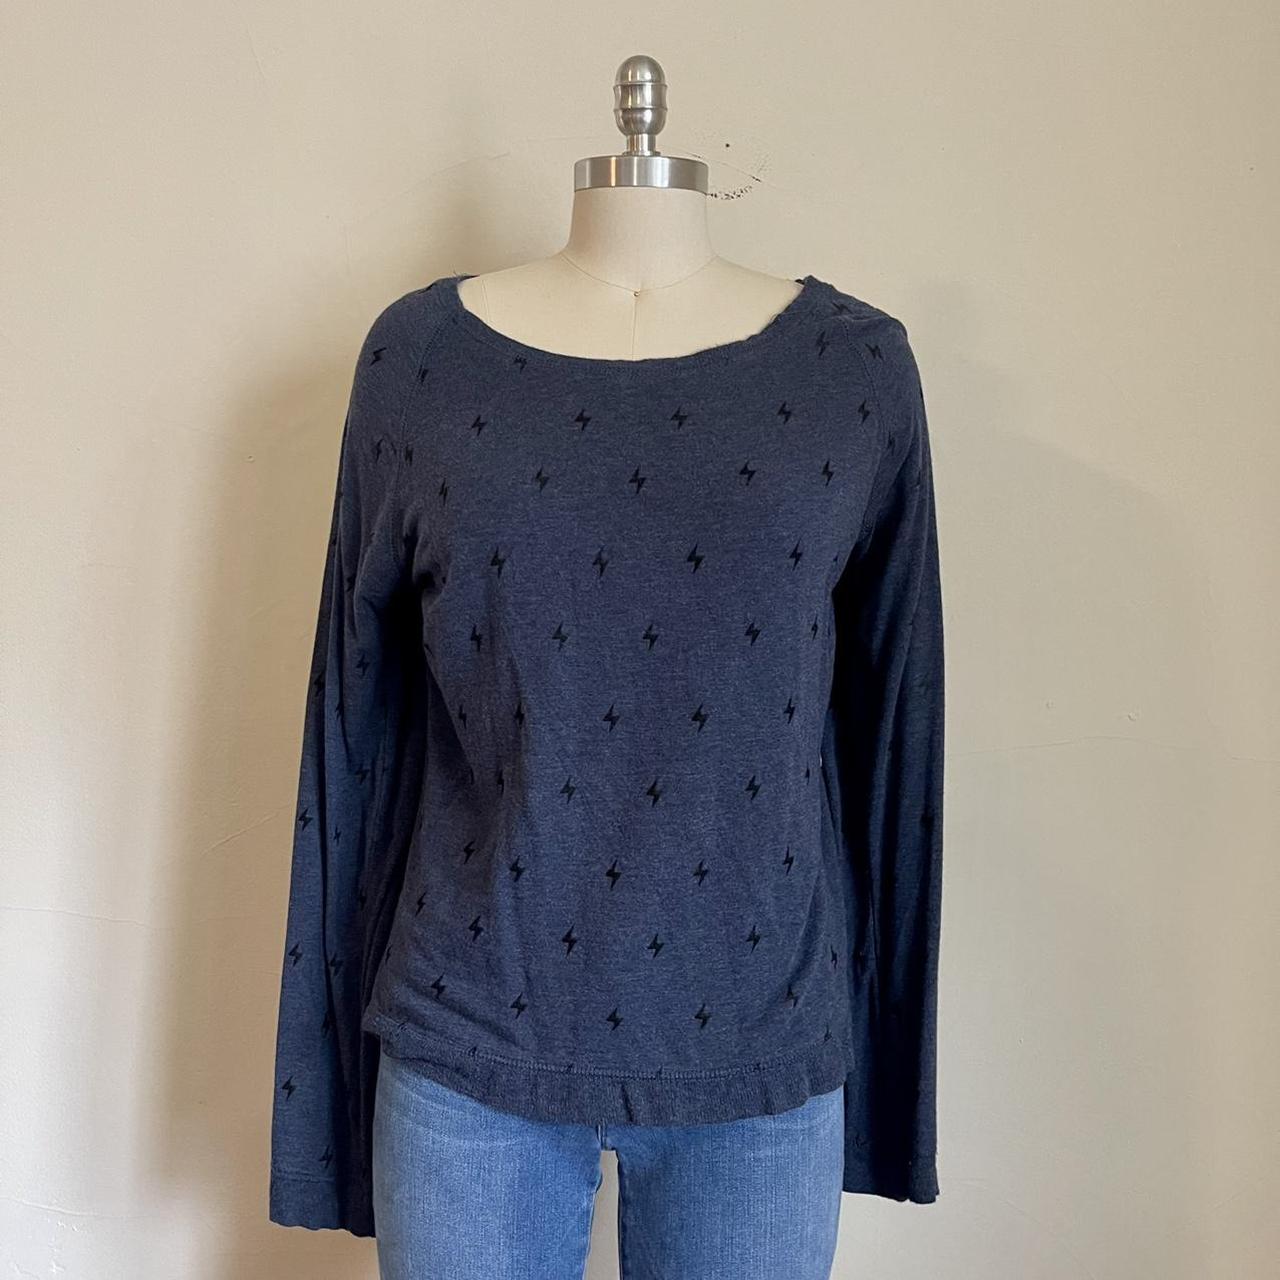 PJ Salvage Women's Blue and Navy Sweatshirt